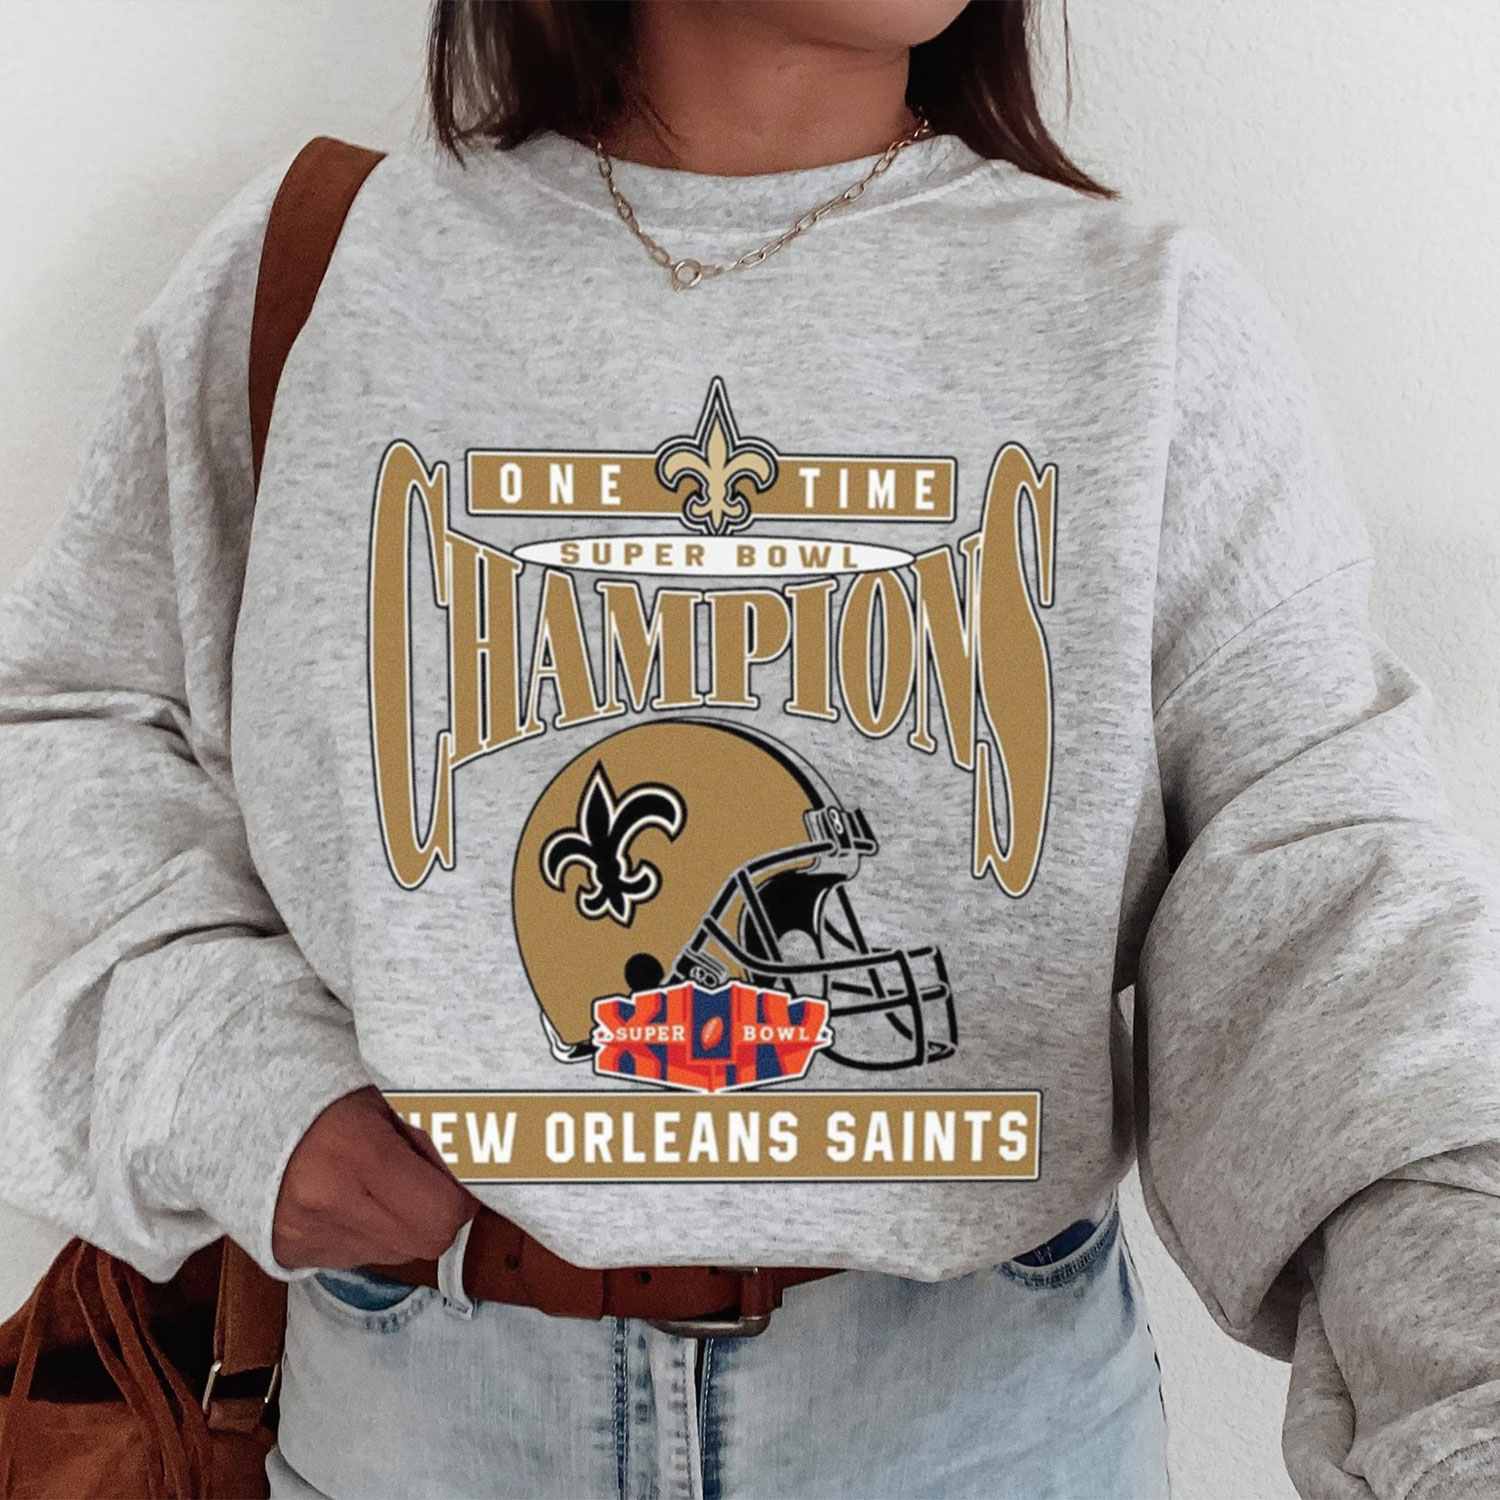 One Time Super Bowl Champions New Orleans Saints T-Shirt